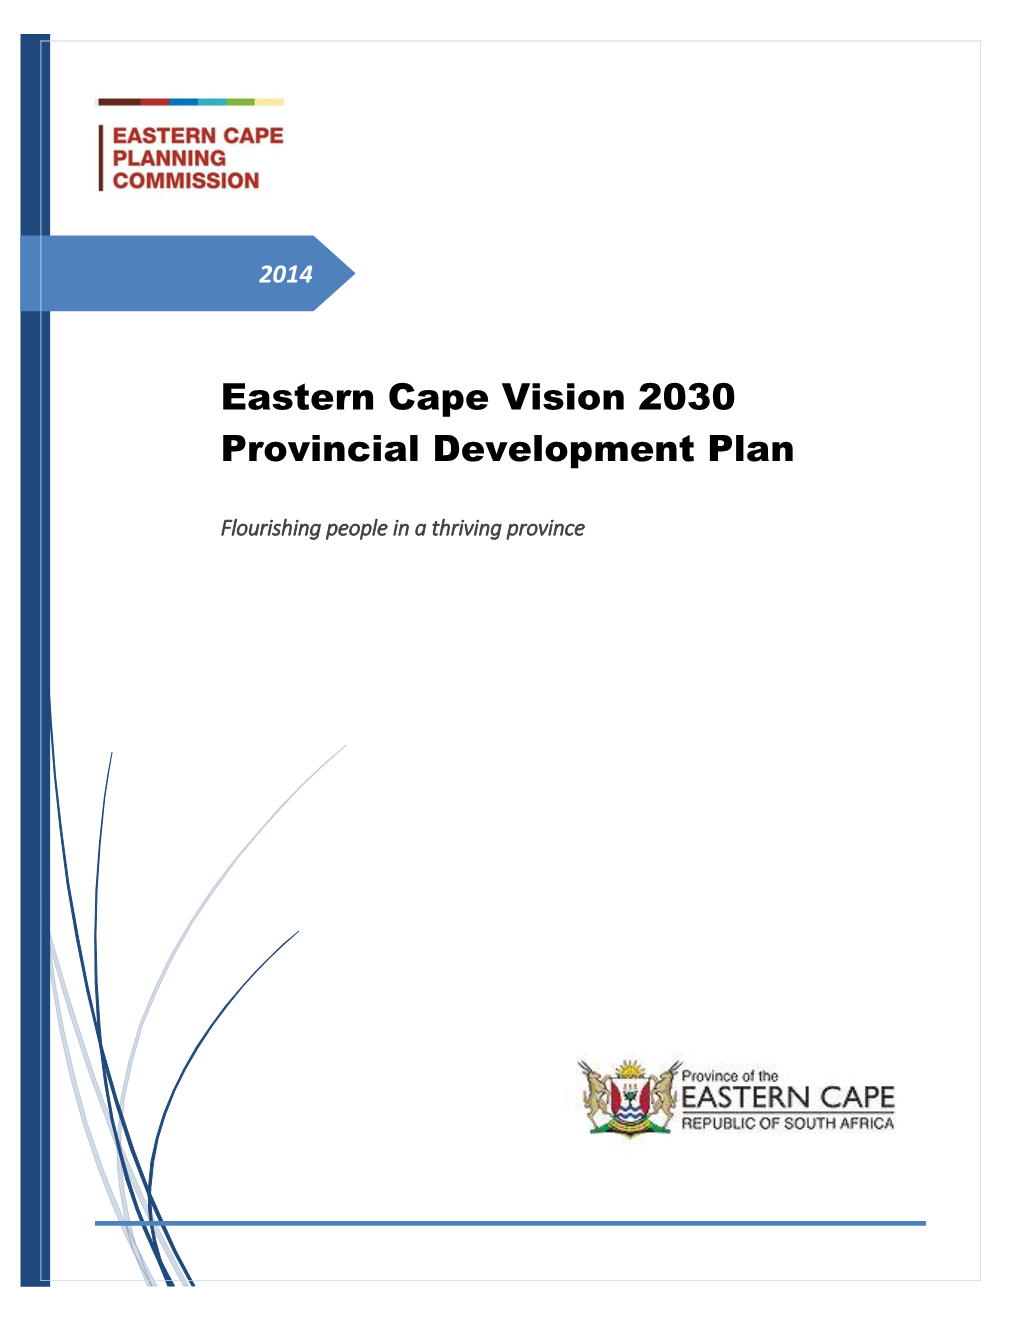 Eastern Cape Vision 2030 Provincial Development Plan (PDP)